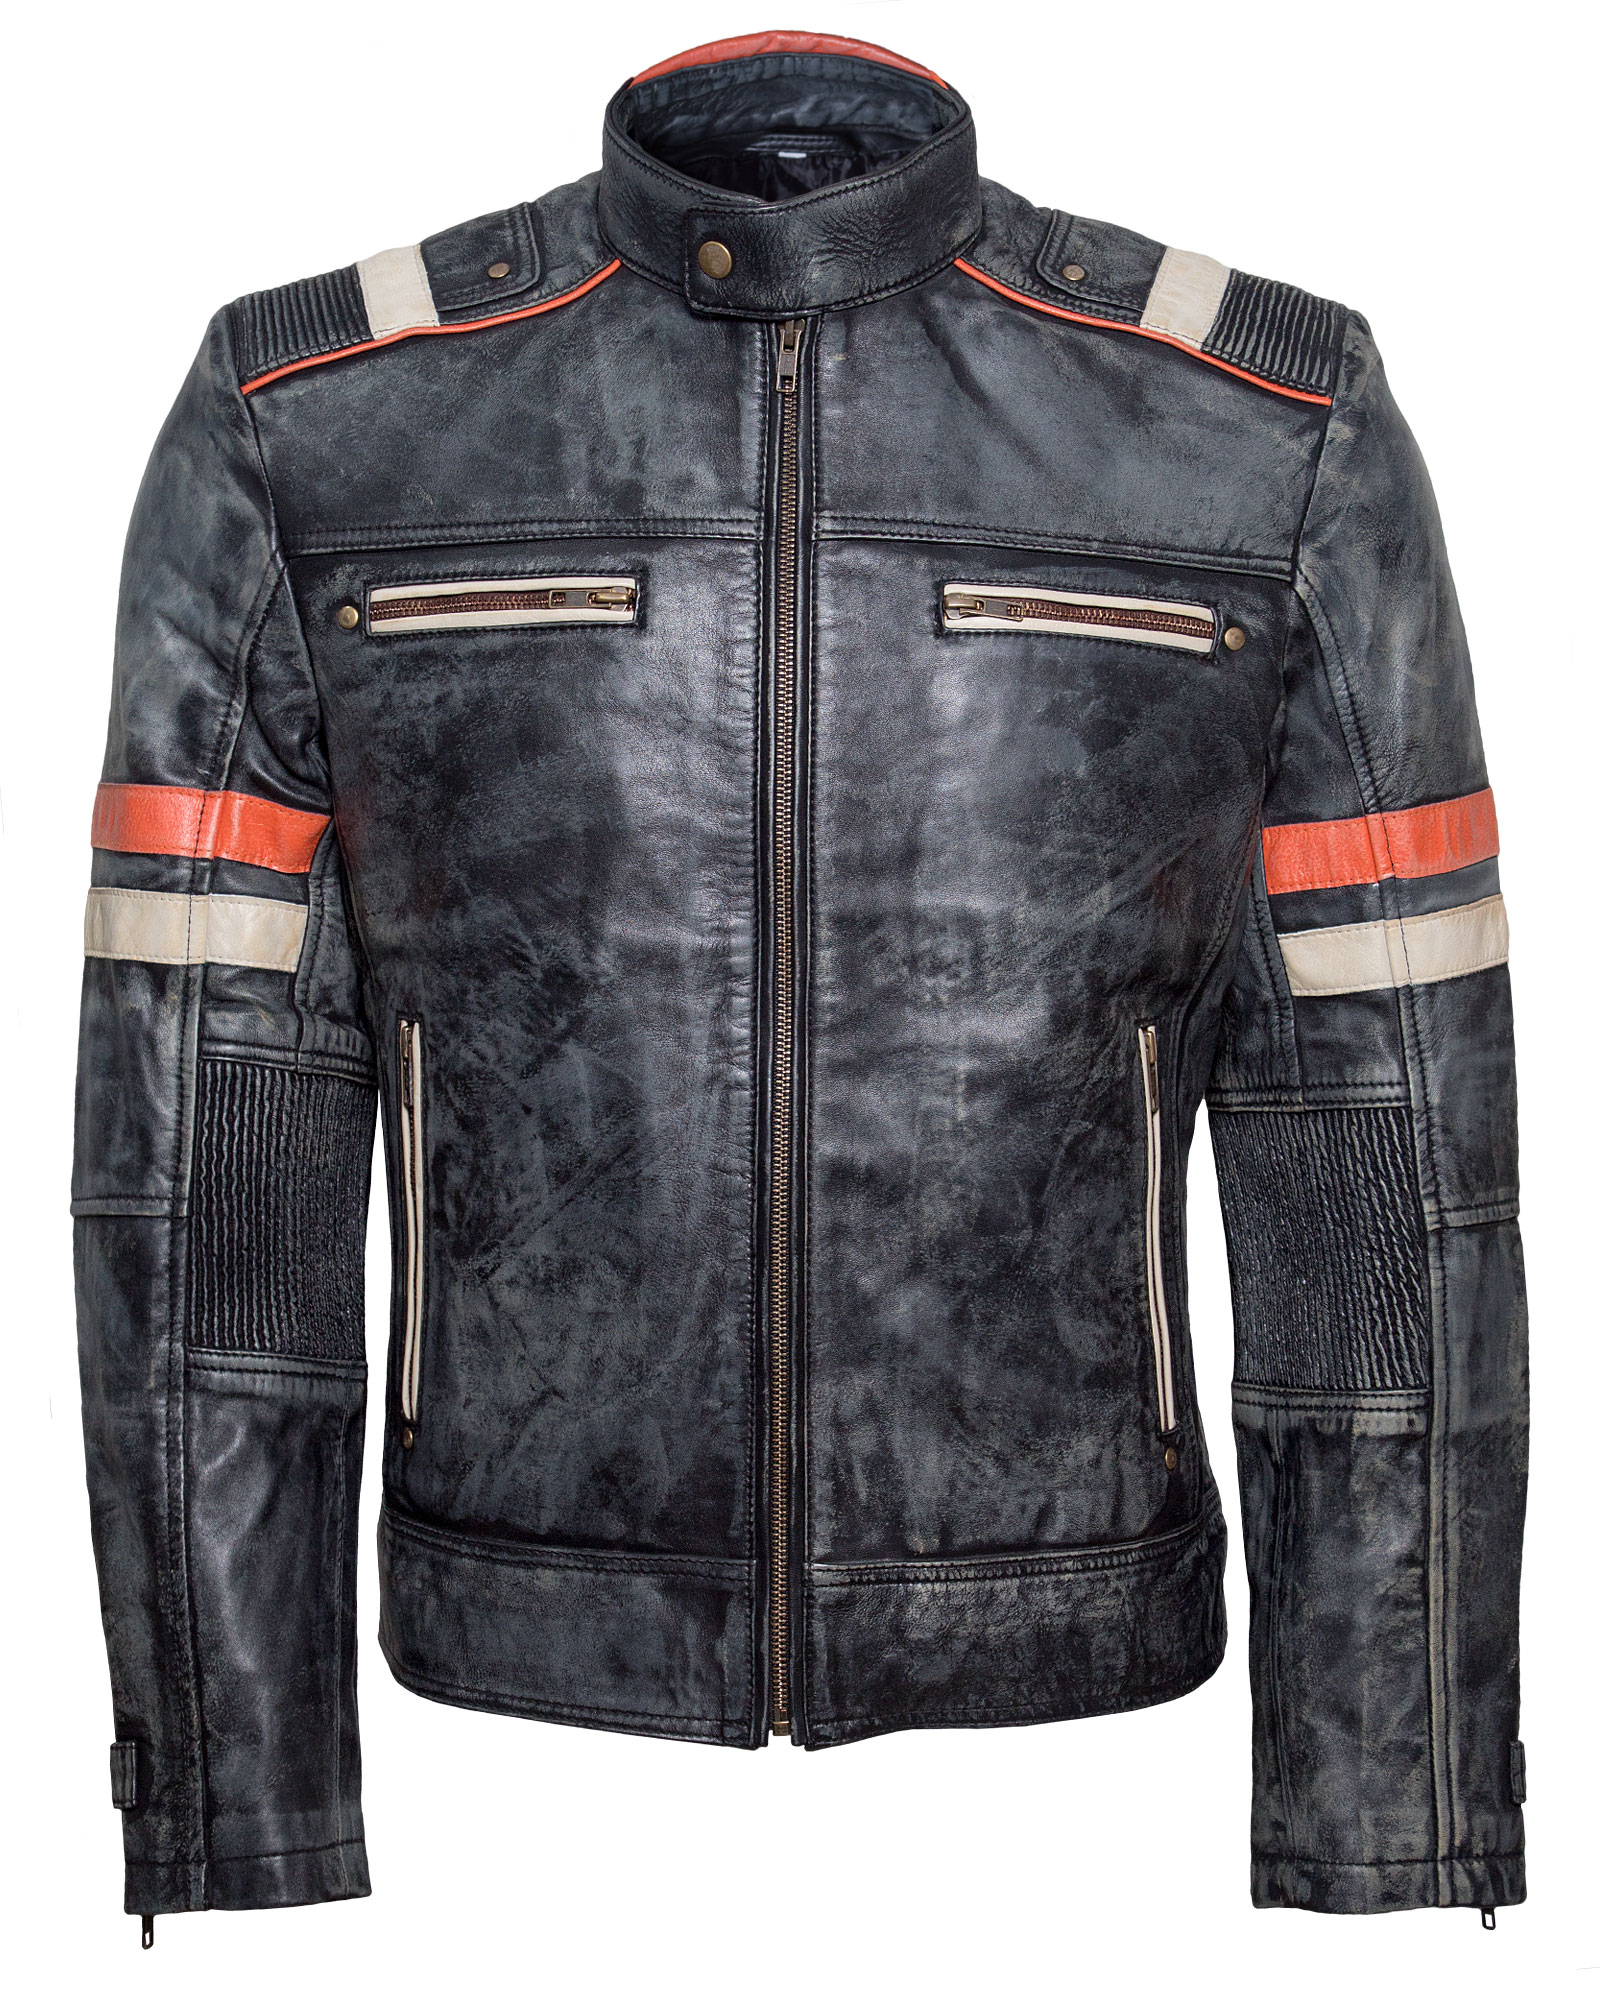 Retro 2 Cafe Racer Distressed Leather Biker Jacket | XtremeJackets